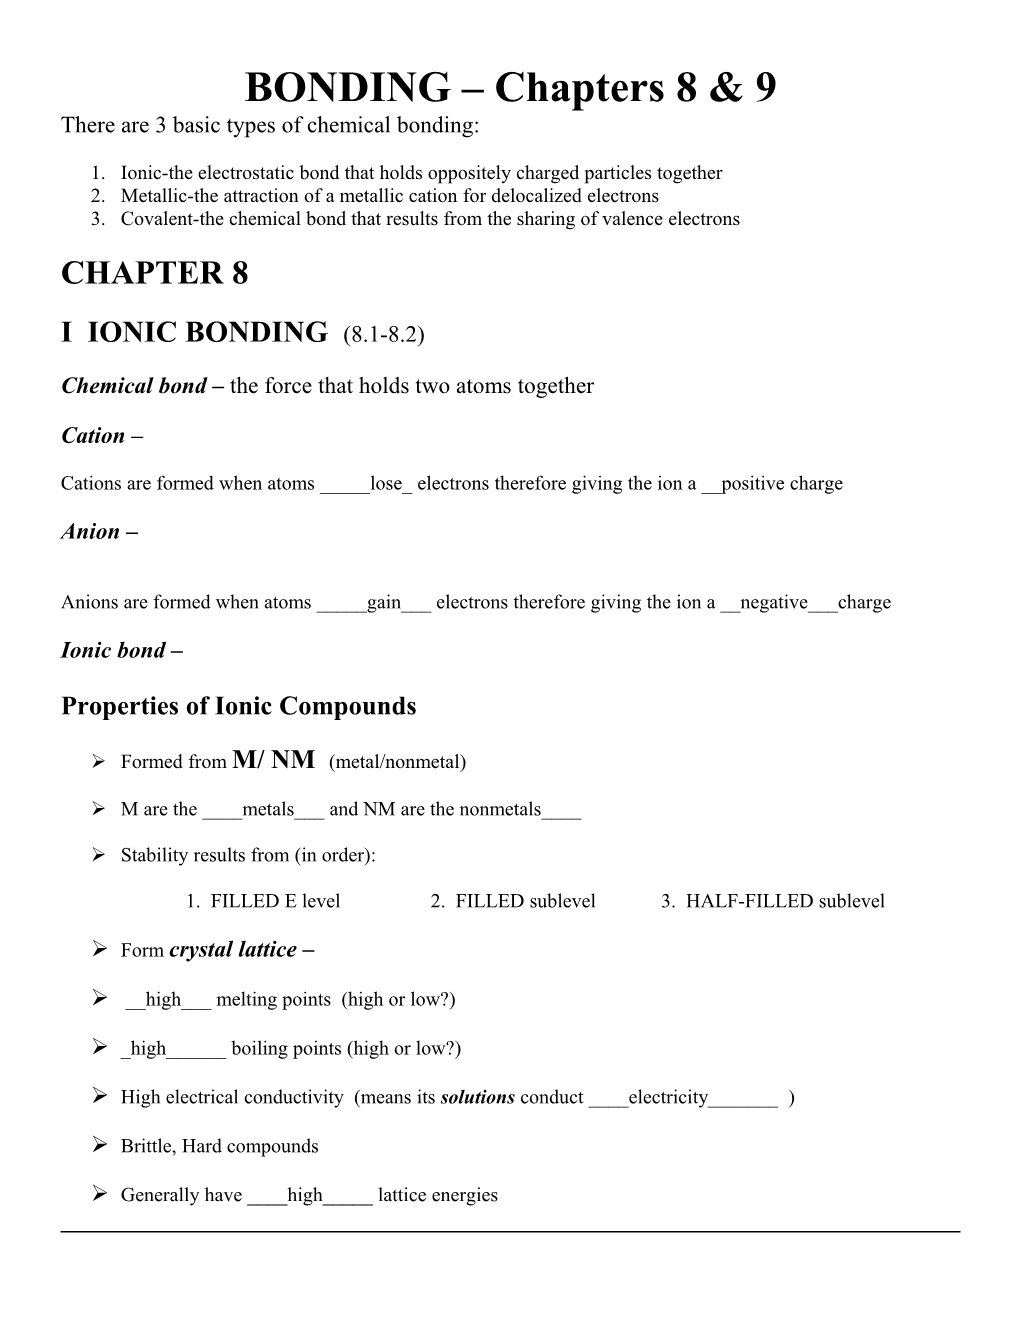 BONDING Chapters 8 & 9